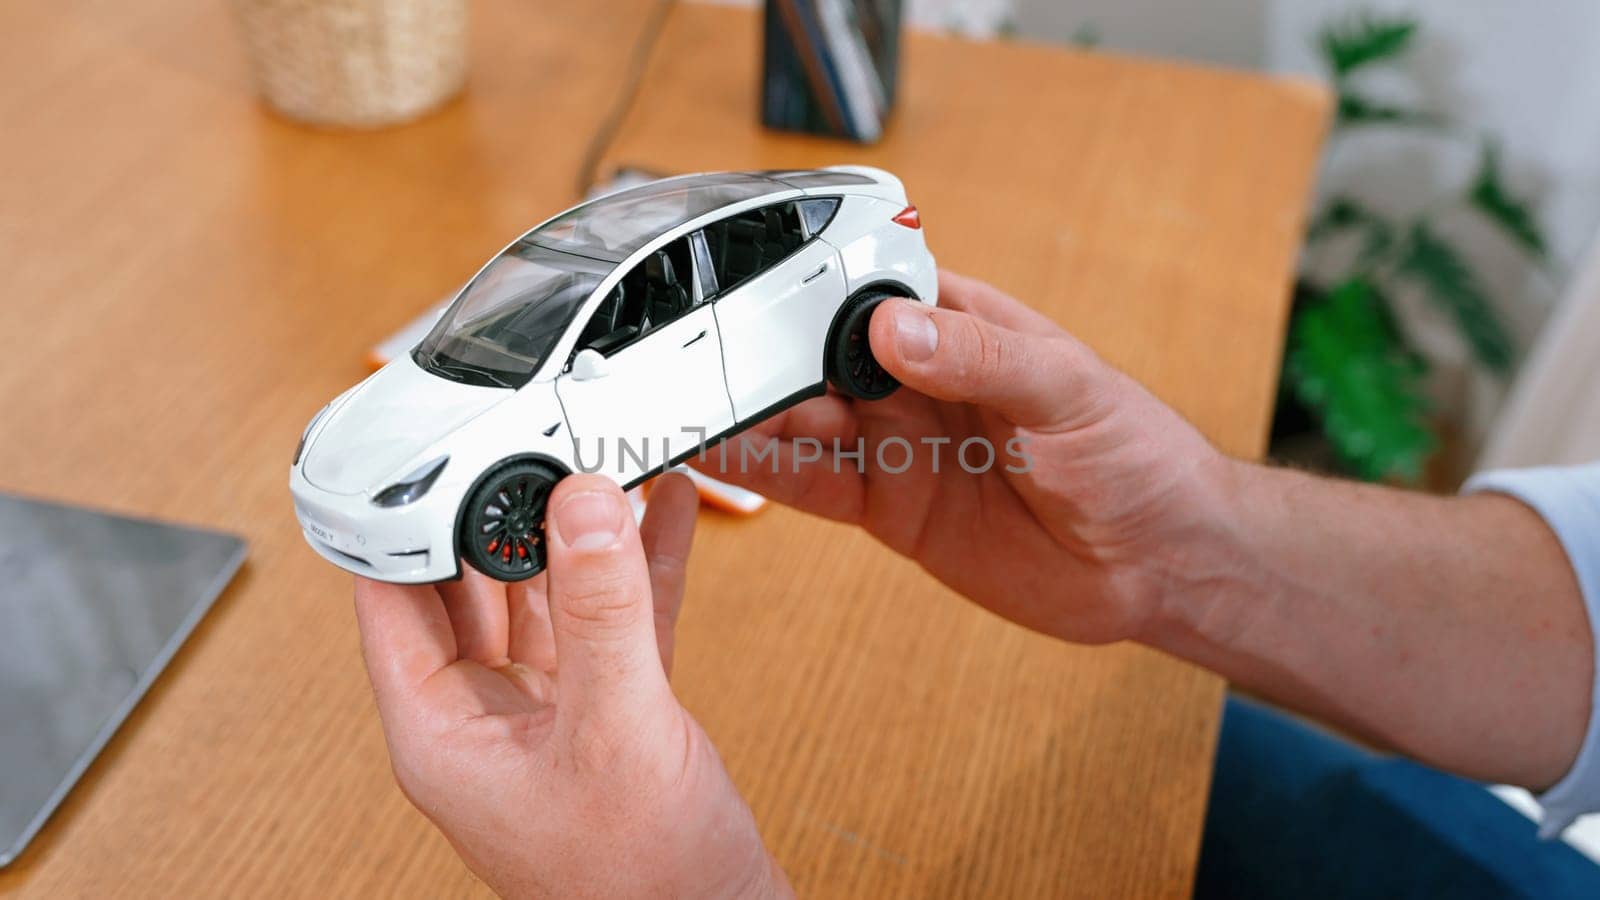 Car design engineer analyze car model prototype. Synchronos by biancoblue